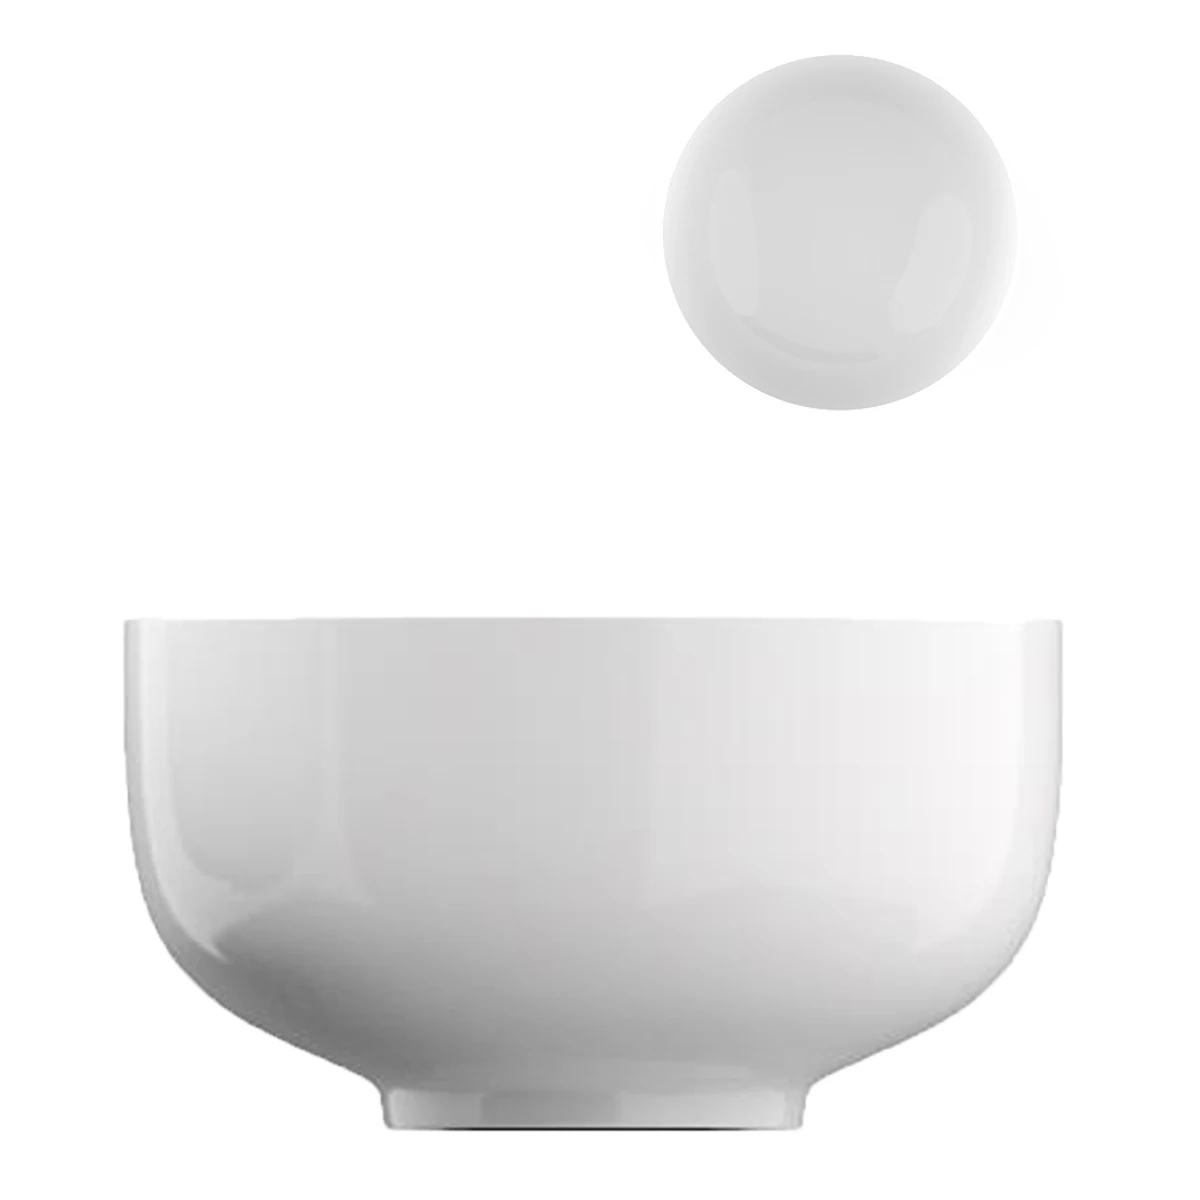 

White Bowls Ceramic bowl Porcelain Bowls White Bowls for Serving Ice Cream, Fruit, Dipping Sauce T209001